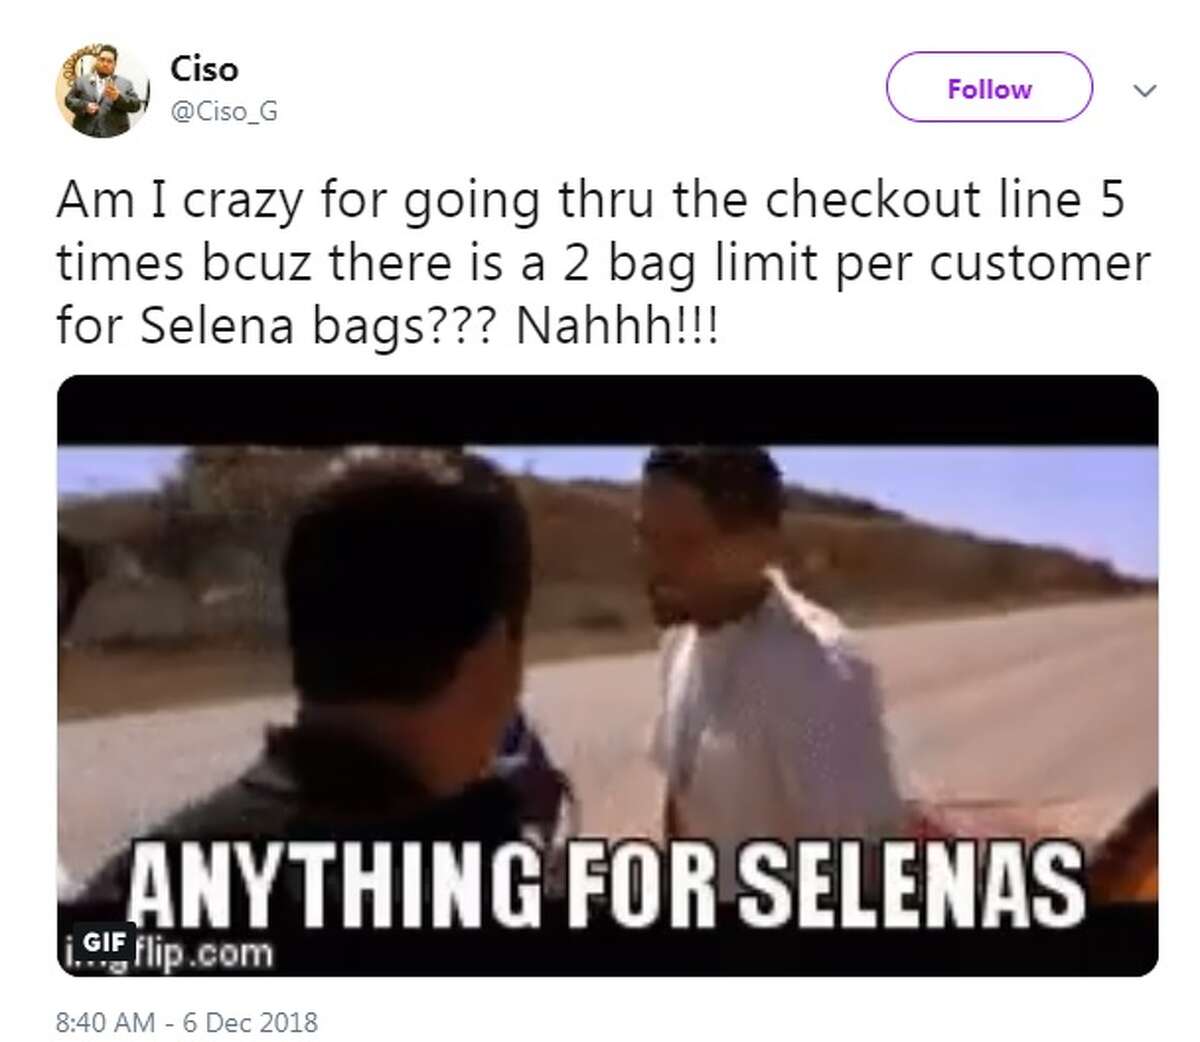 @Cisco_G: Am I crazy for going thru the checkout line 5 times bcuz there is a 2 bag limit per customer for Selena bags??? Nahhh!!!